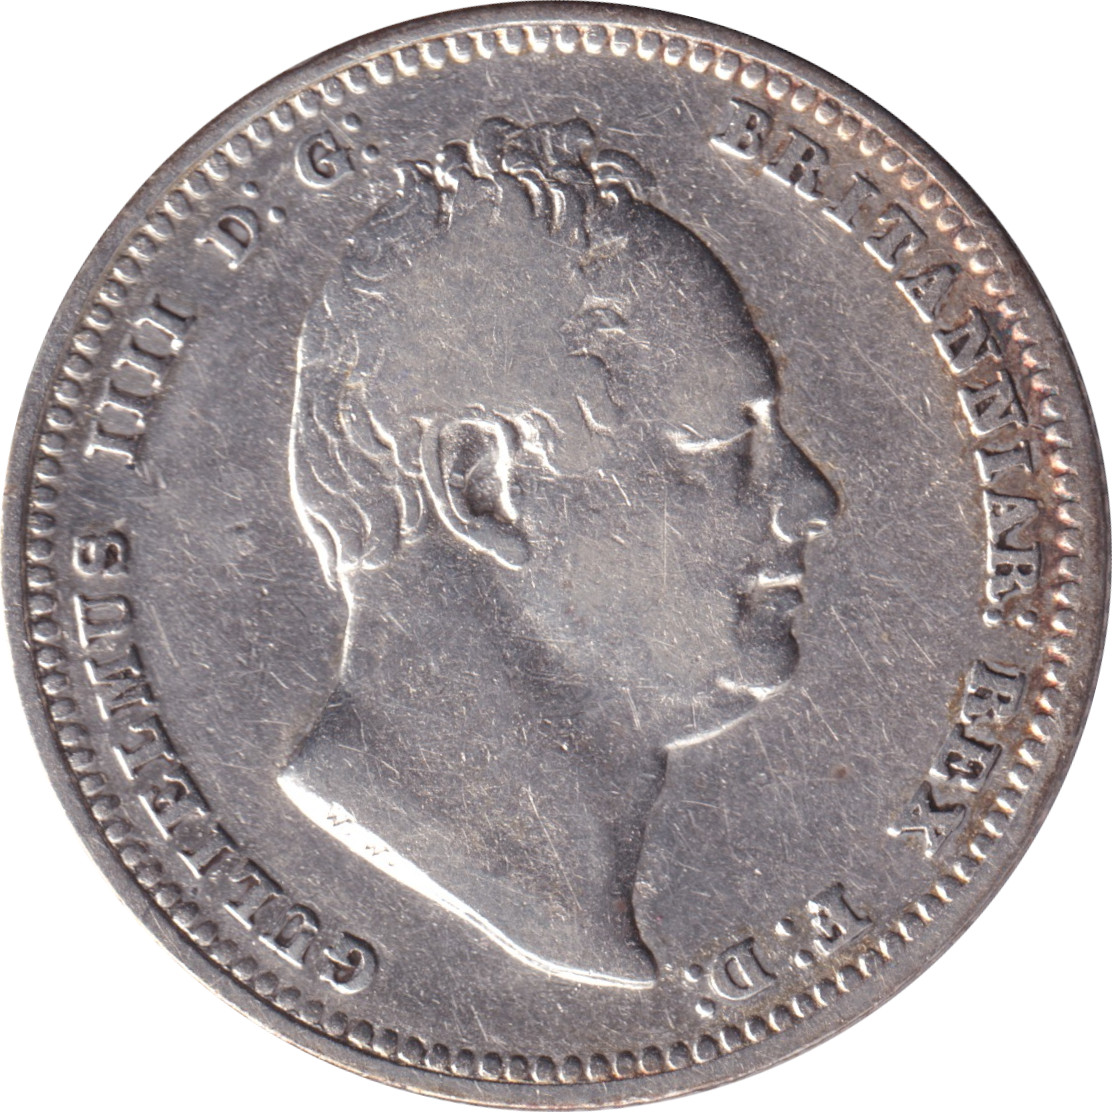 1 shilling - William IV